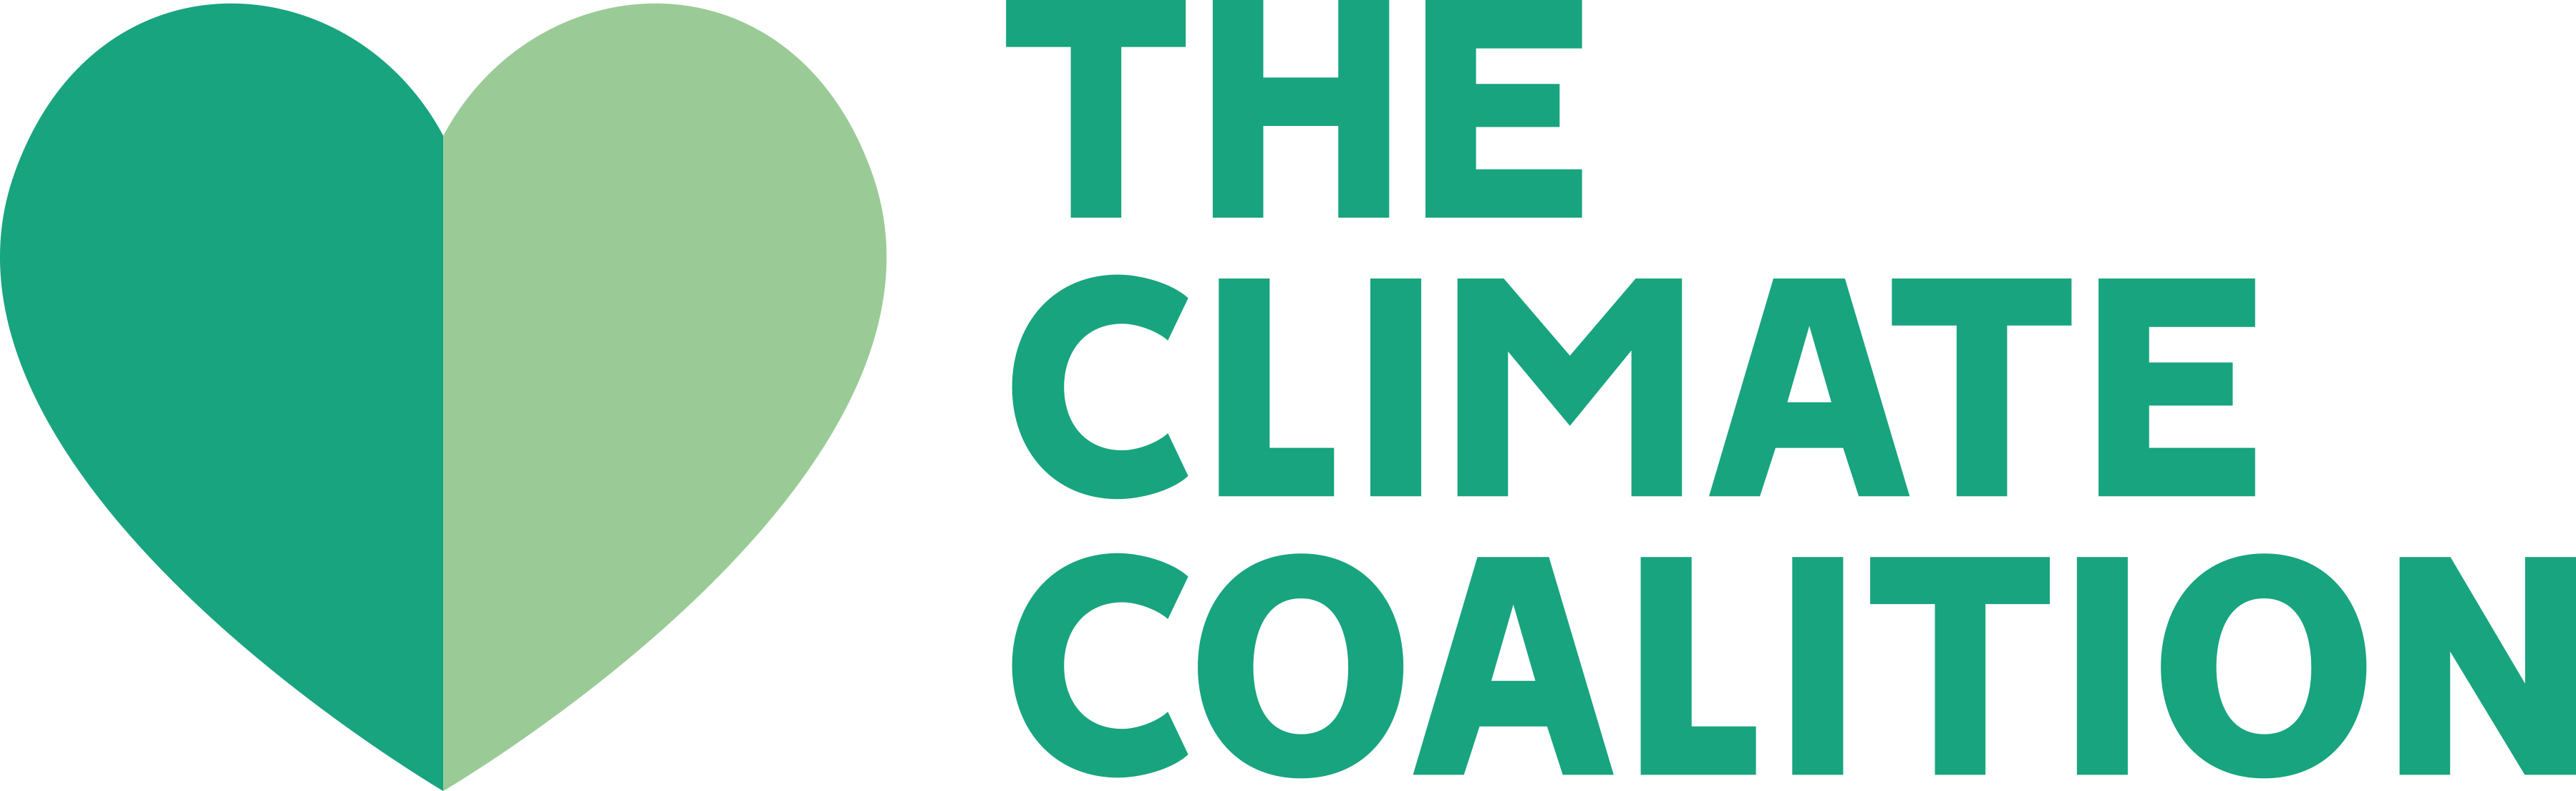 The Climate Coalition logo